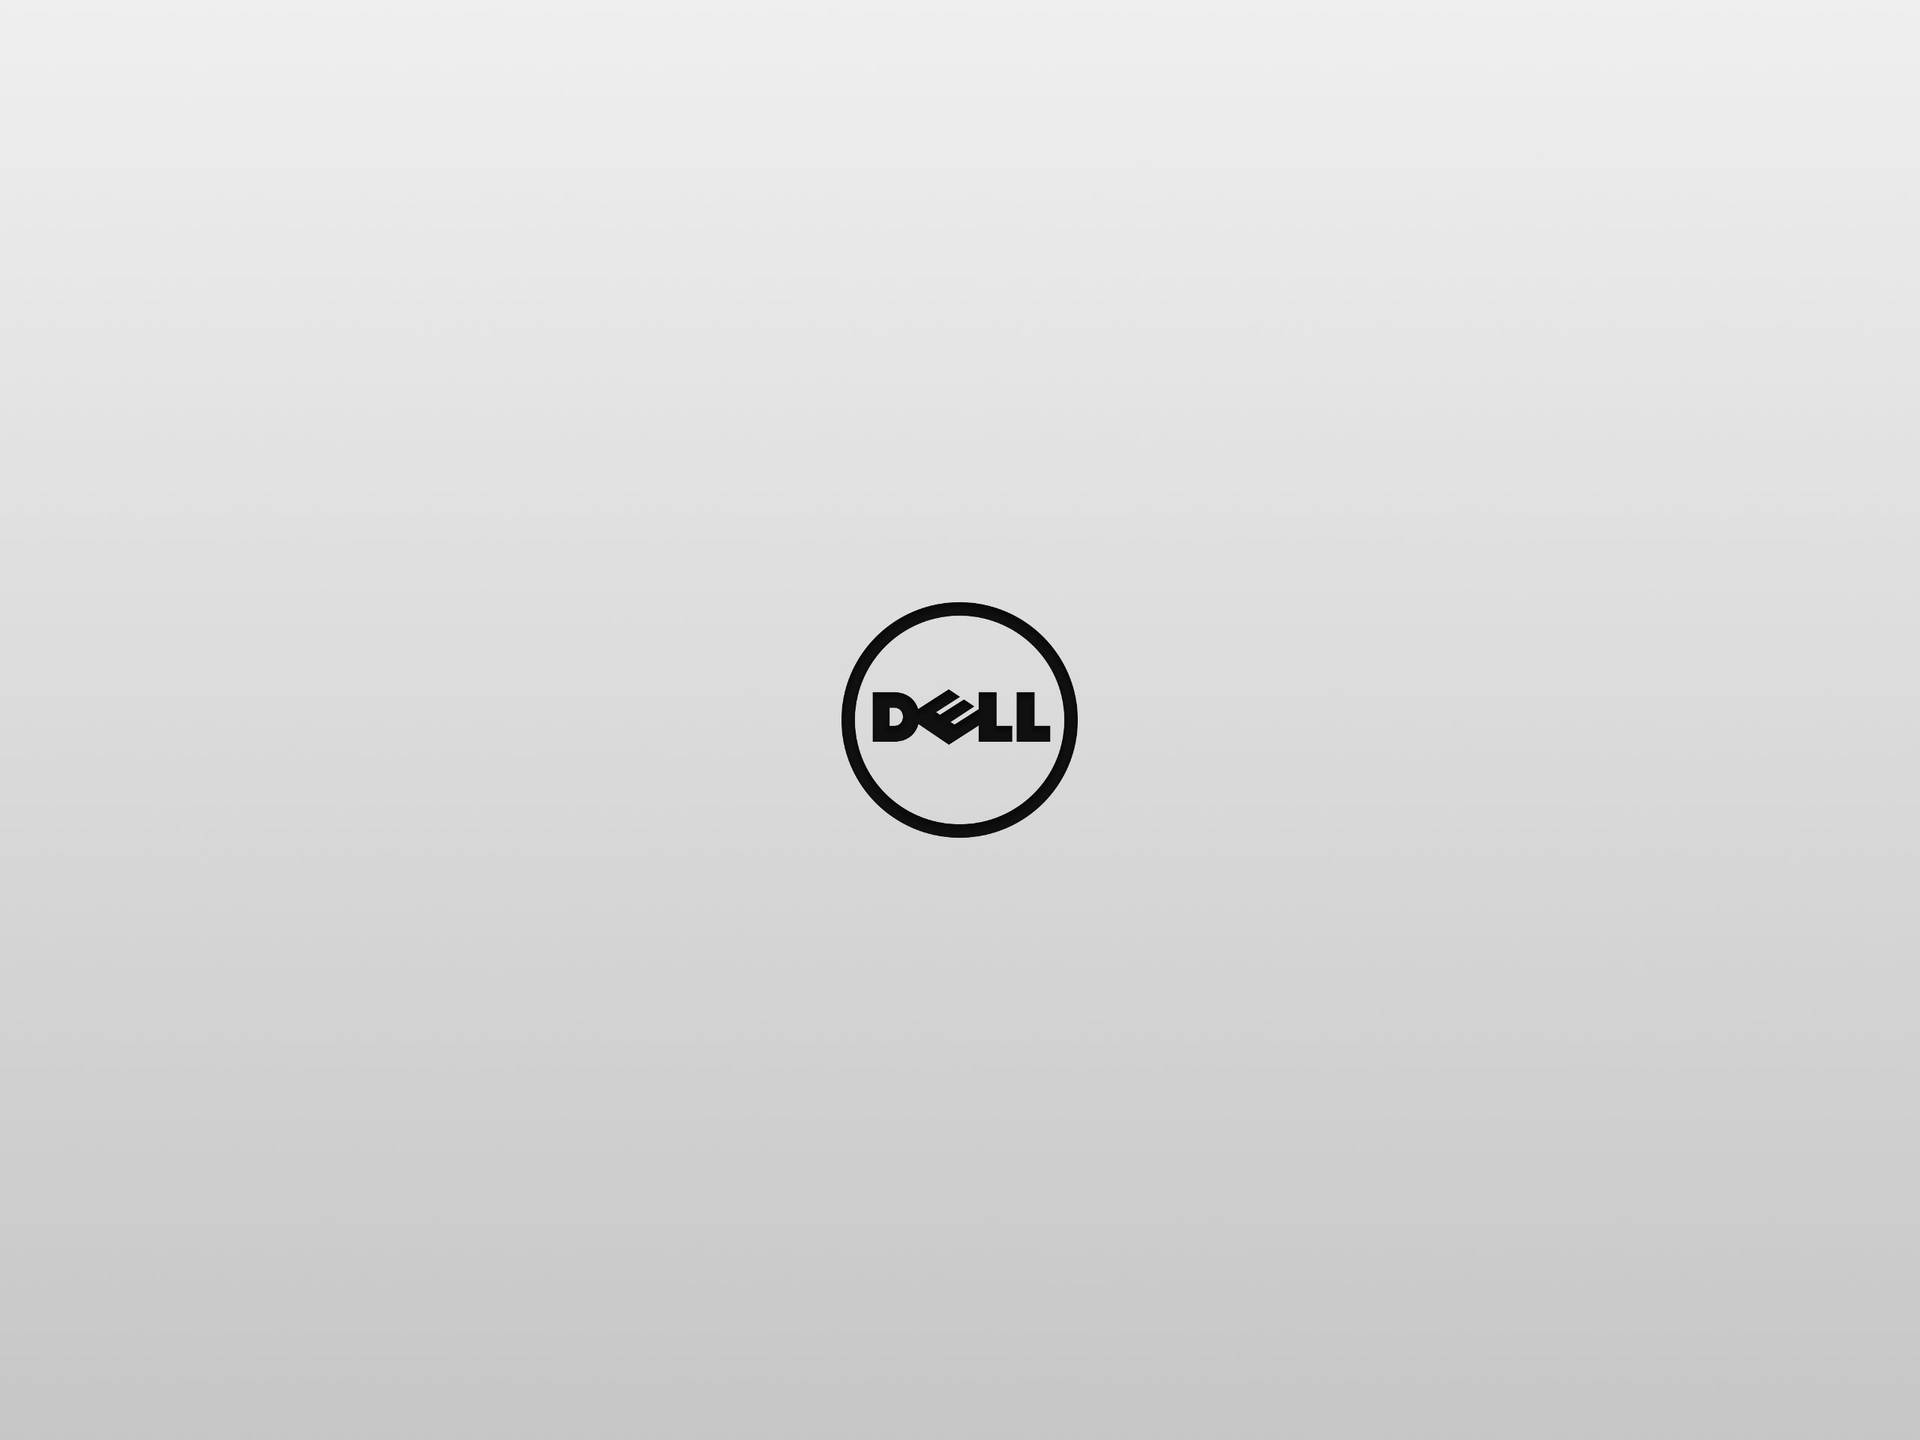 Minimalist Dell Hd Background